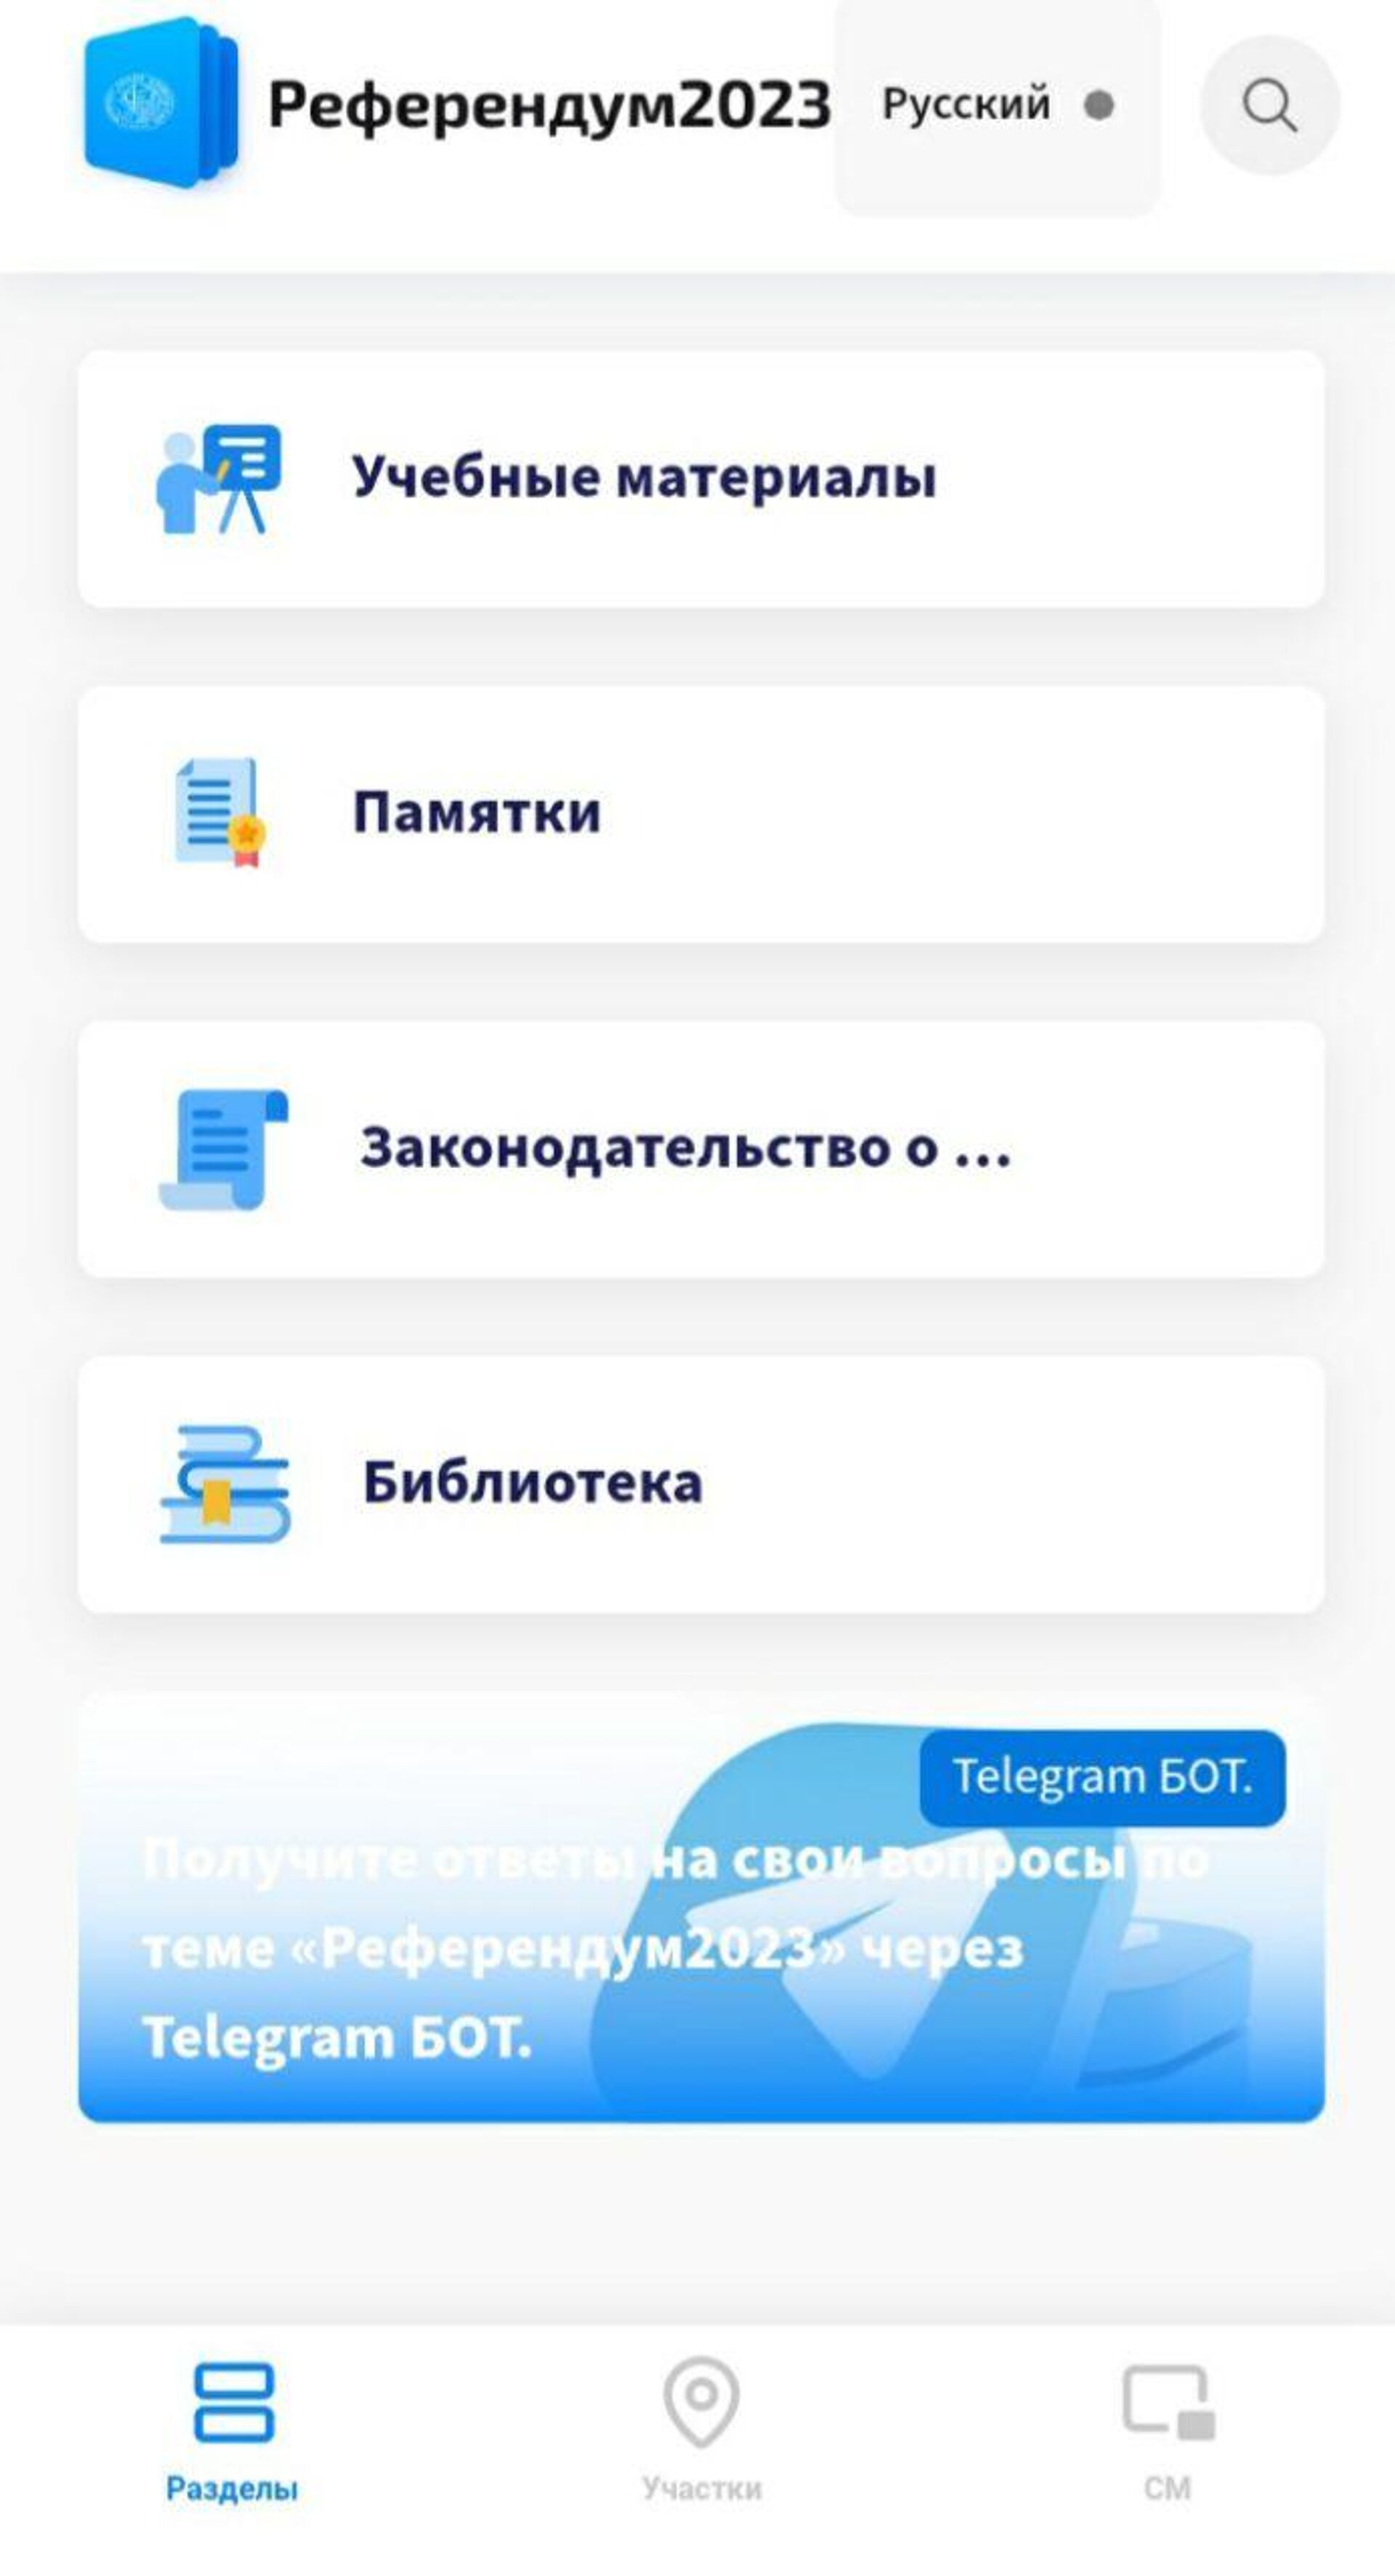 В Узбекистане запустили приложение по референдуму  - Sputnik Узбекистан, 1920, 01.04.2023